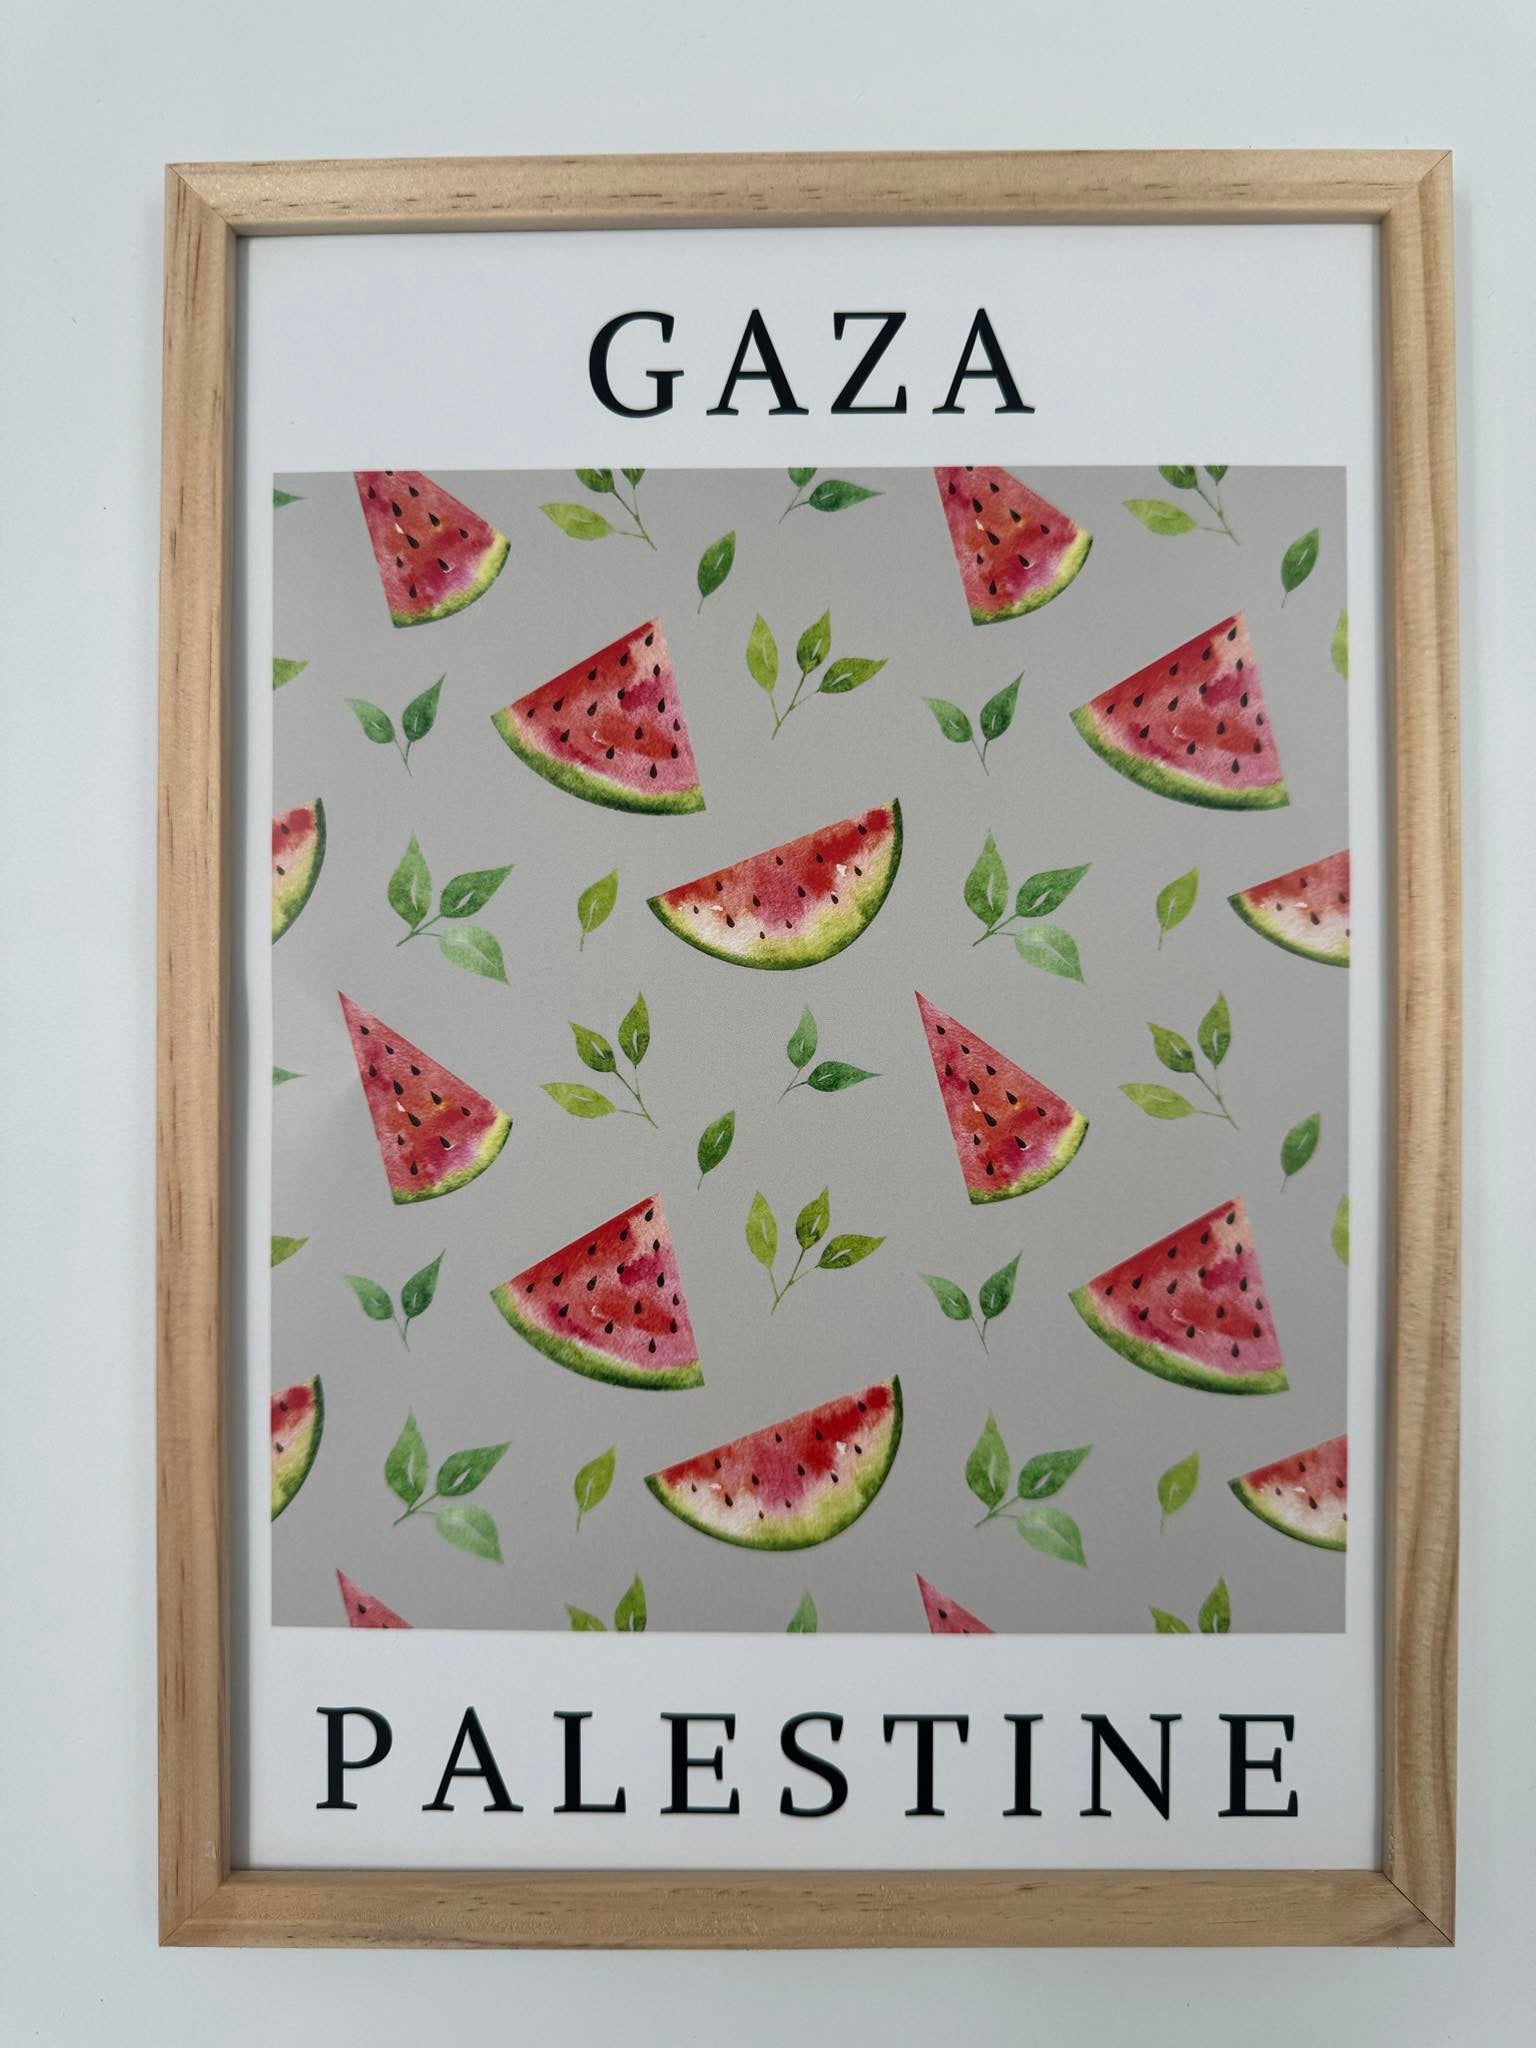 Gaza Watermelon Slice